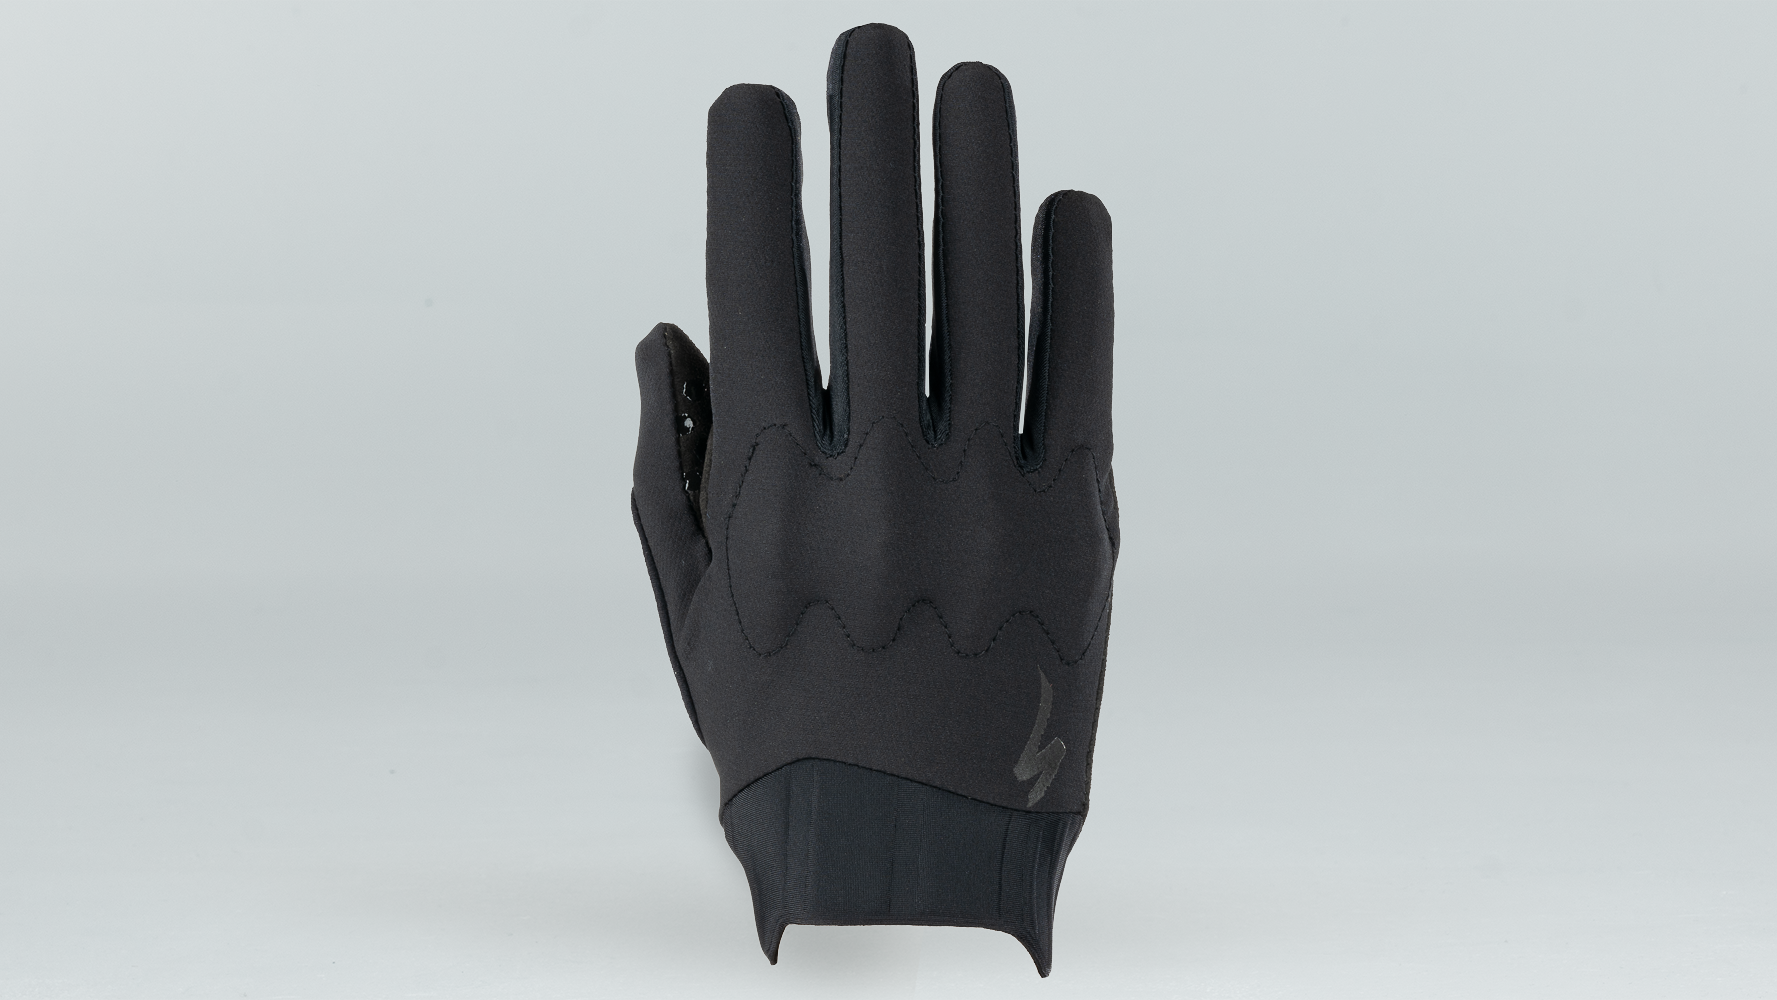 West Loop Gripper Gloves Large Black